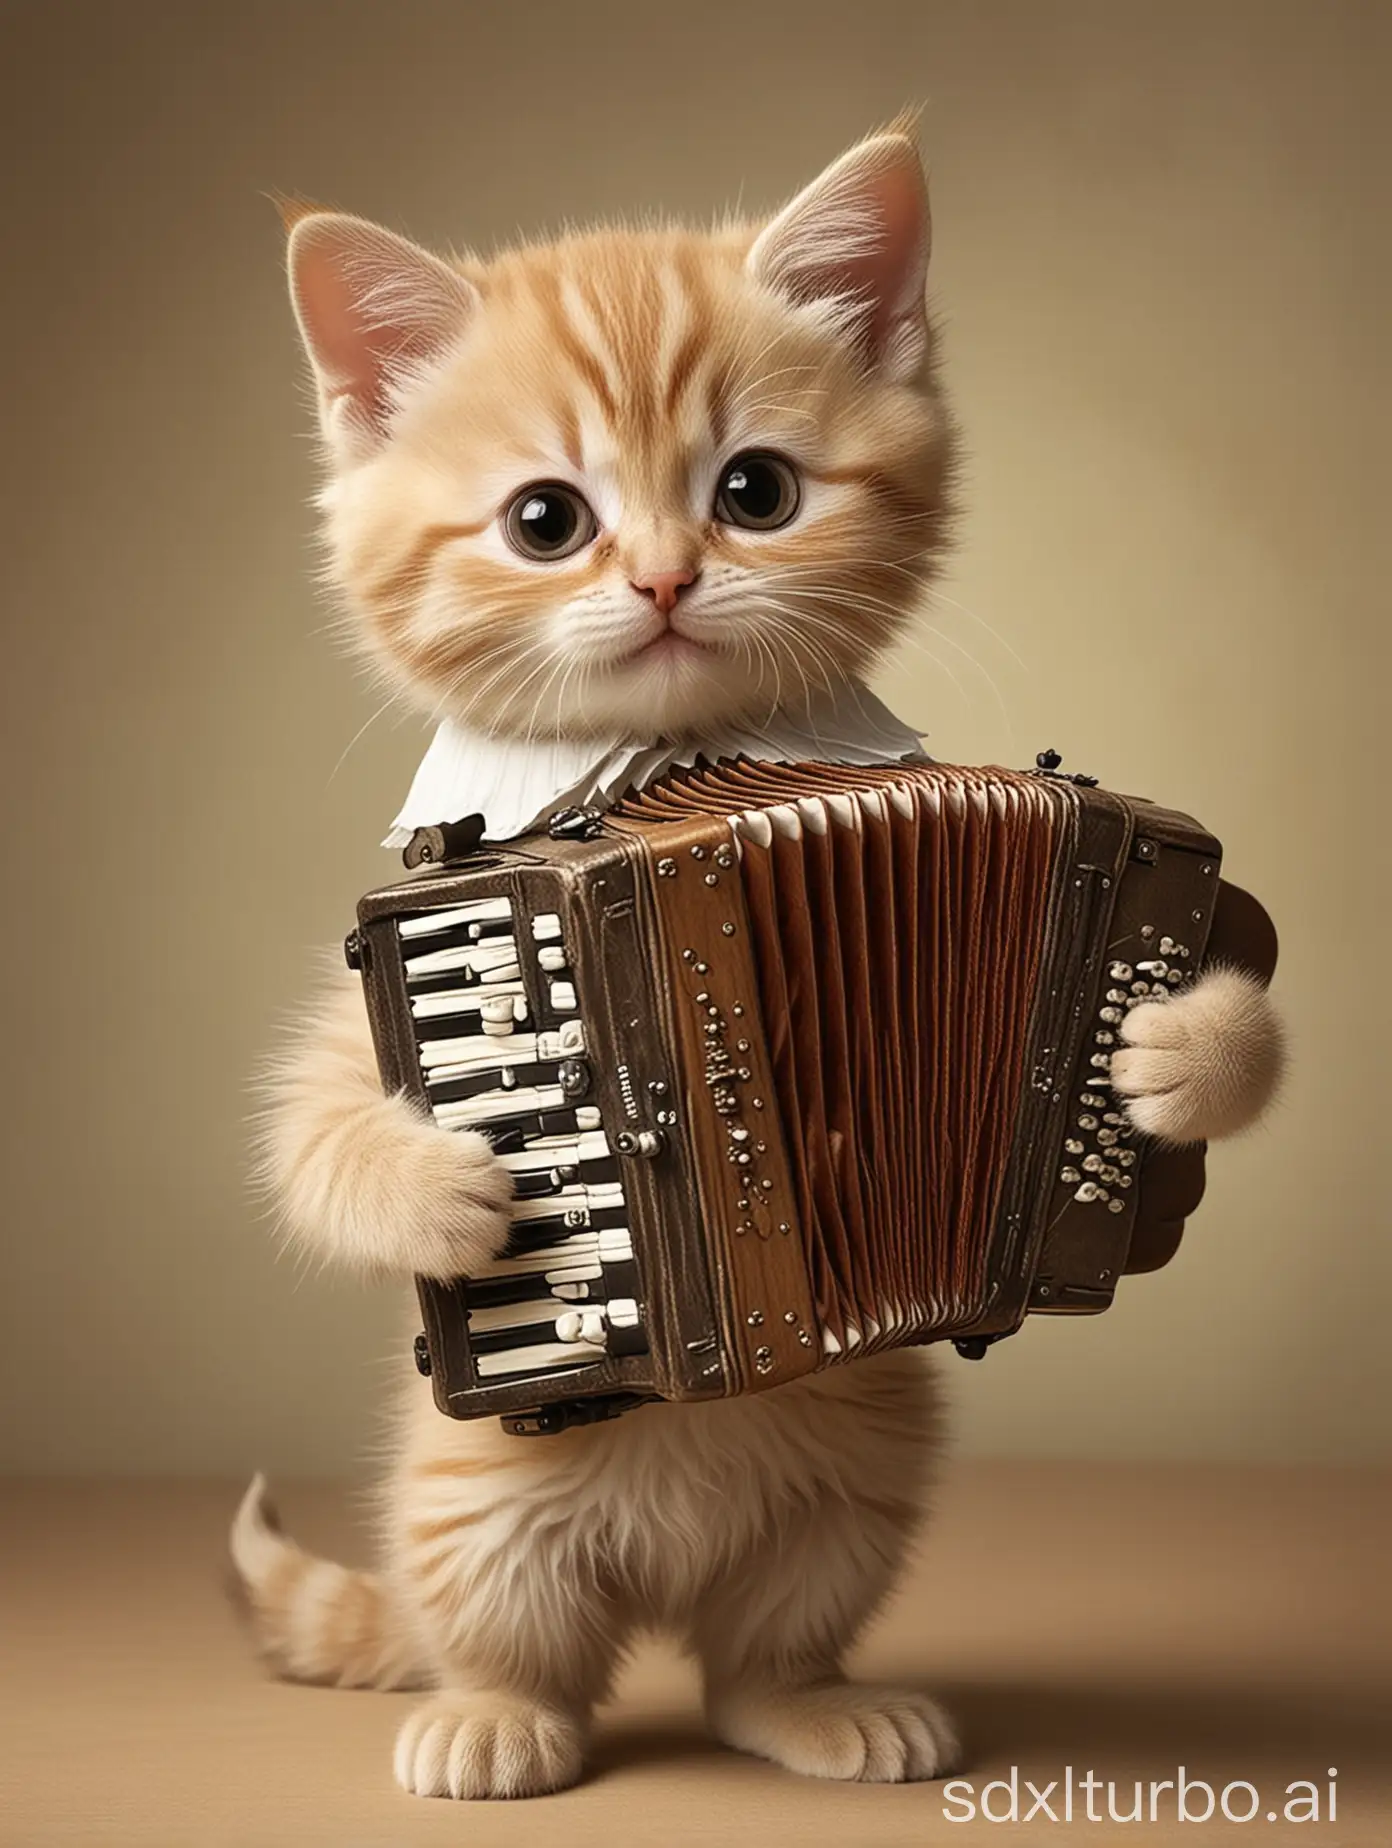 Anthropomorphic-Kitten-Playing-the-Accordion-Whimsical-Feline-Musician-Illustration